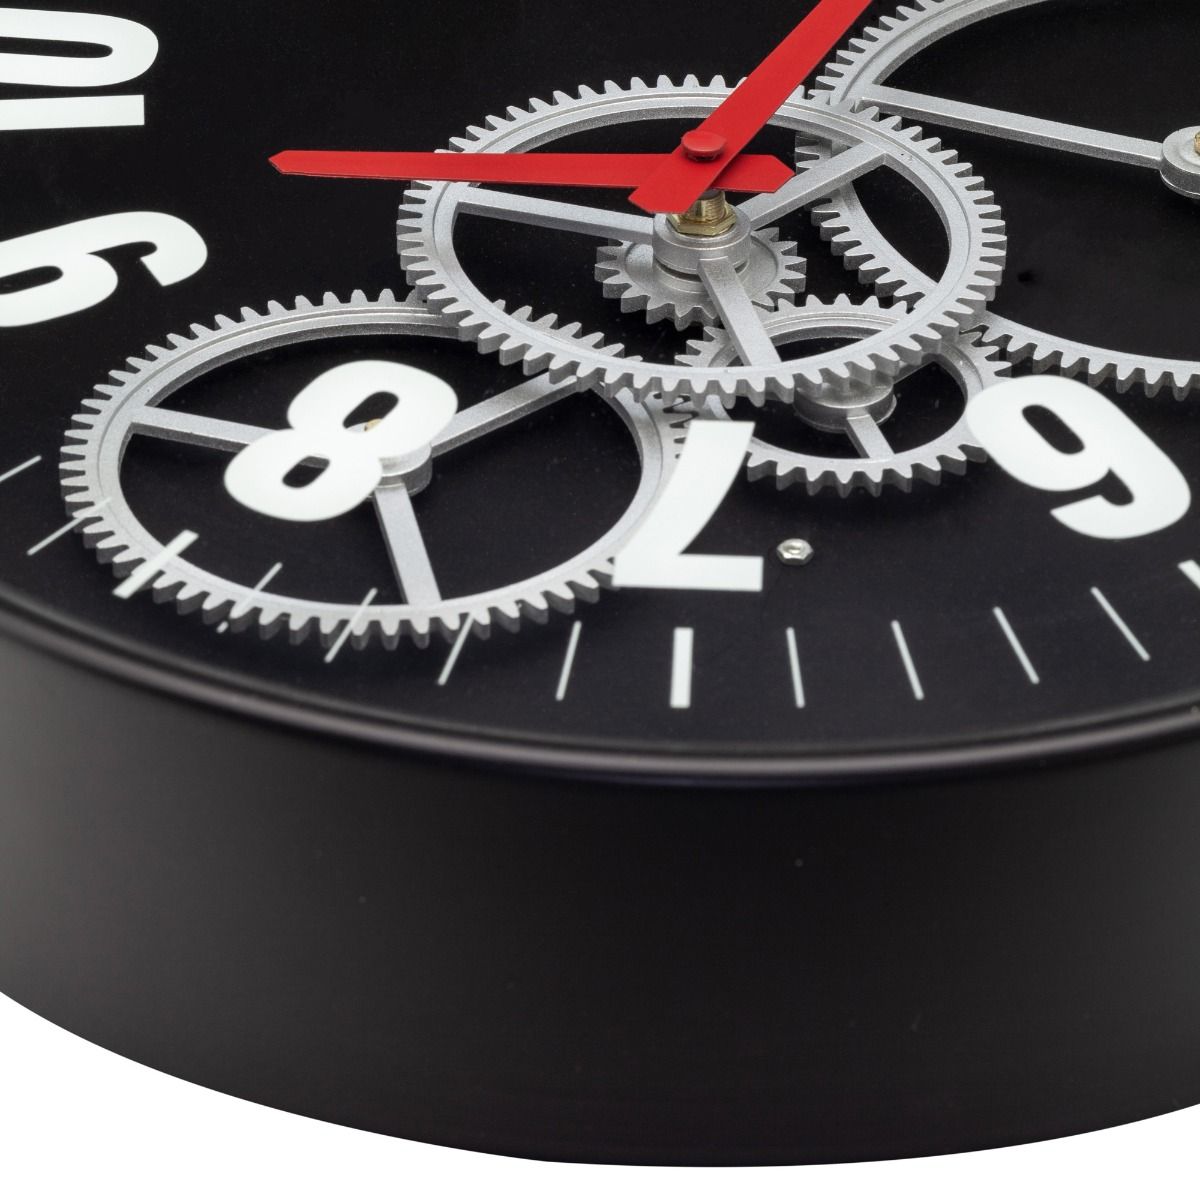 NeXtime Modern Gear Wall Clock 36cm Black - Notbrand